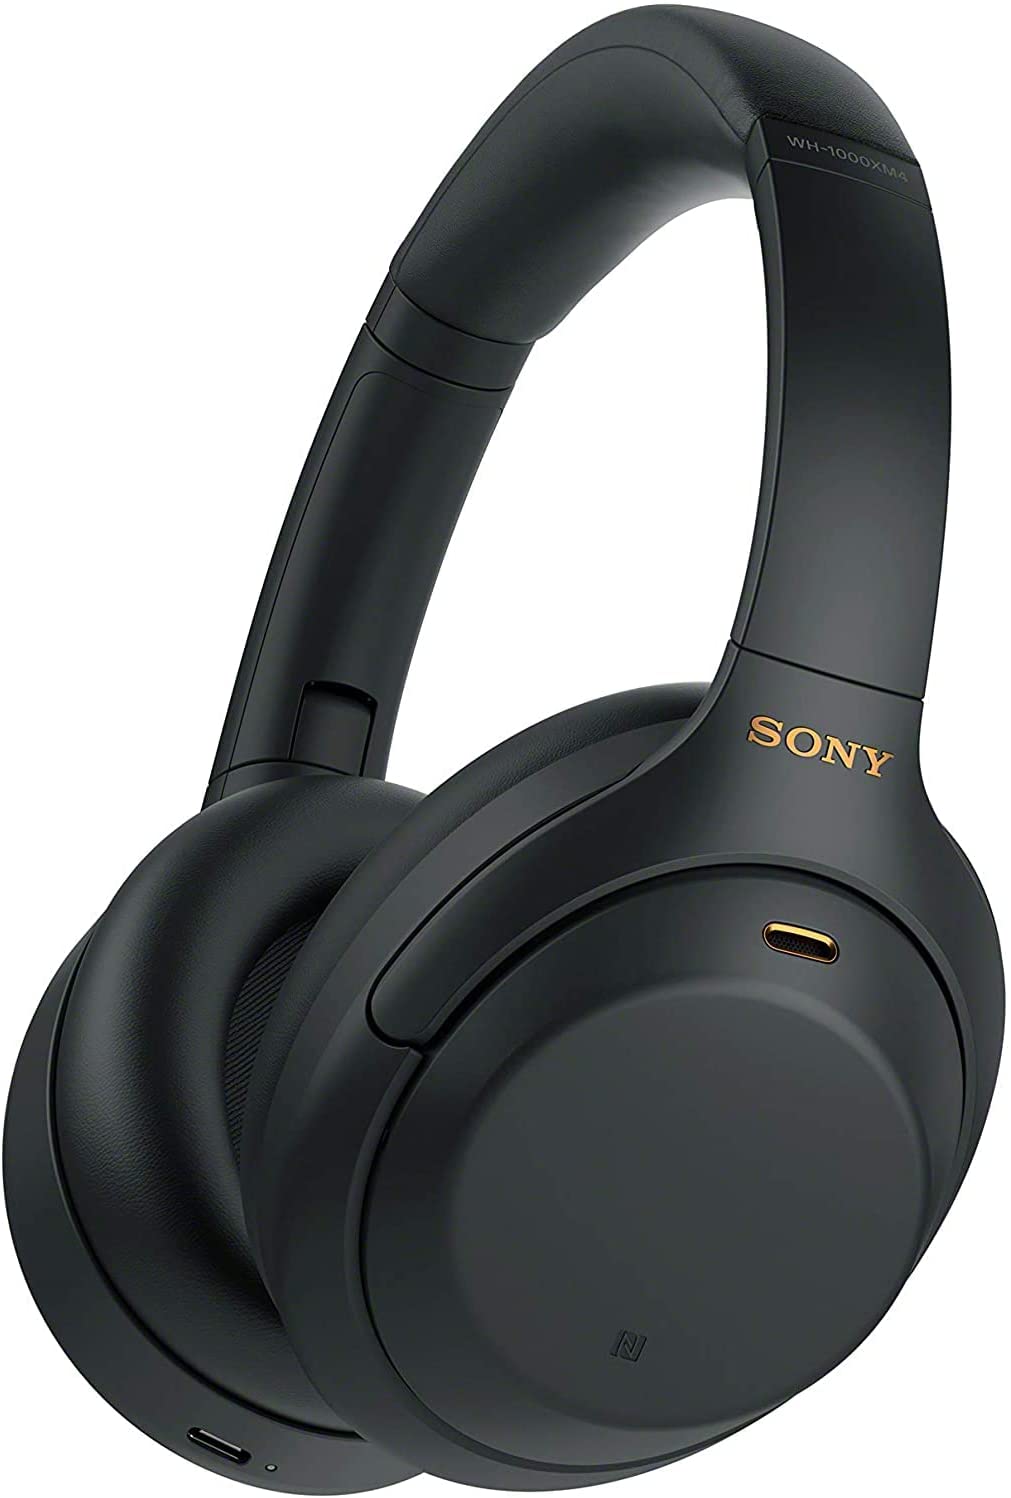 Sony WH-1000XM4 vs. Bose QuietComfort SE vs. Beats Solo 3